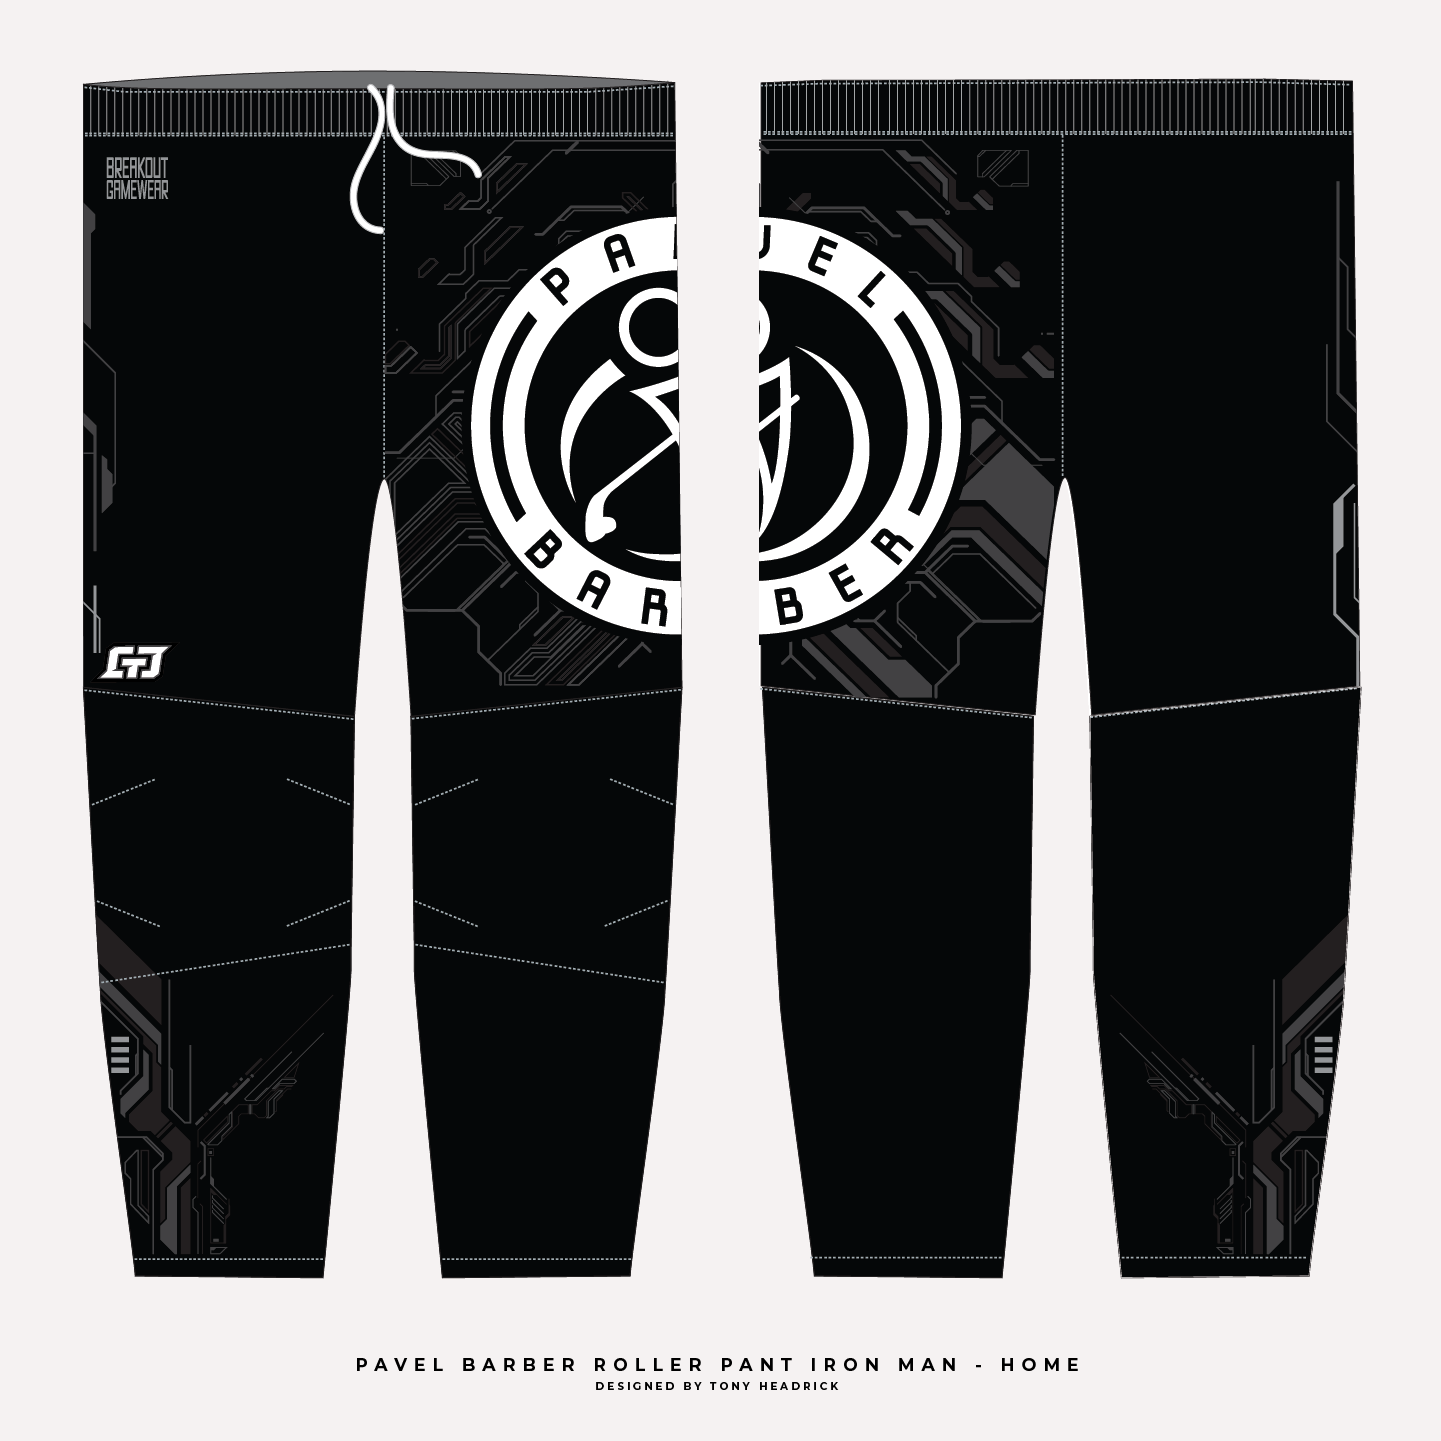 Pavel Barber's Personal Roller Hockey Pants - Designed by Tony Headrick